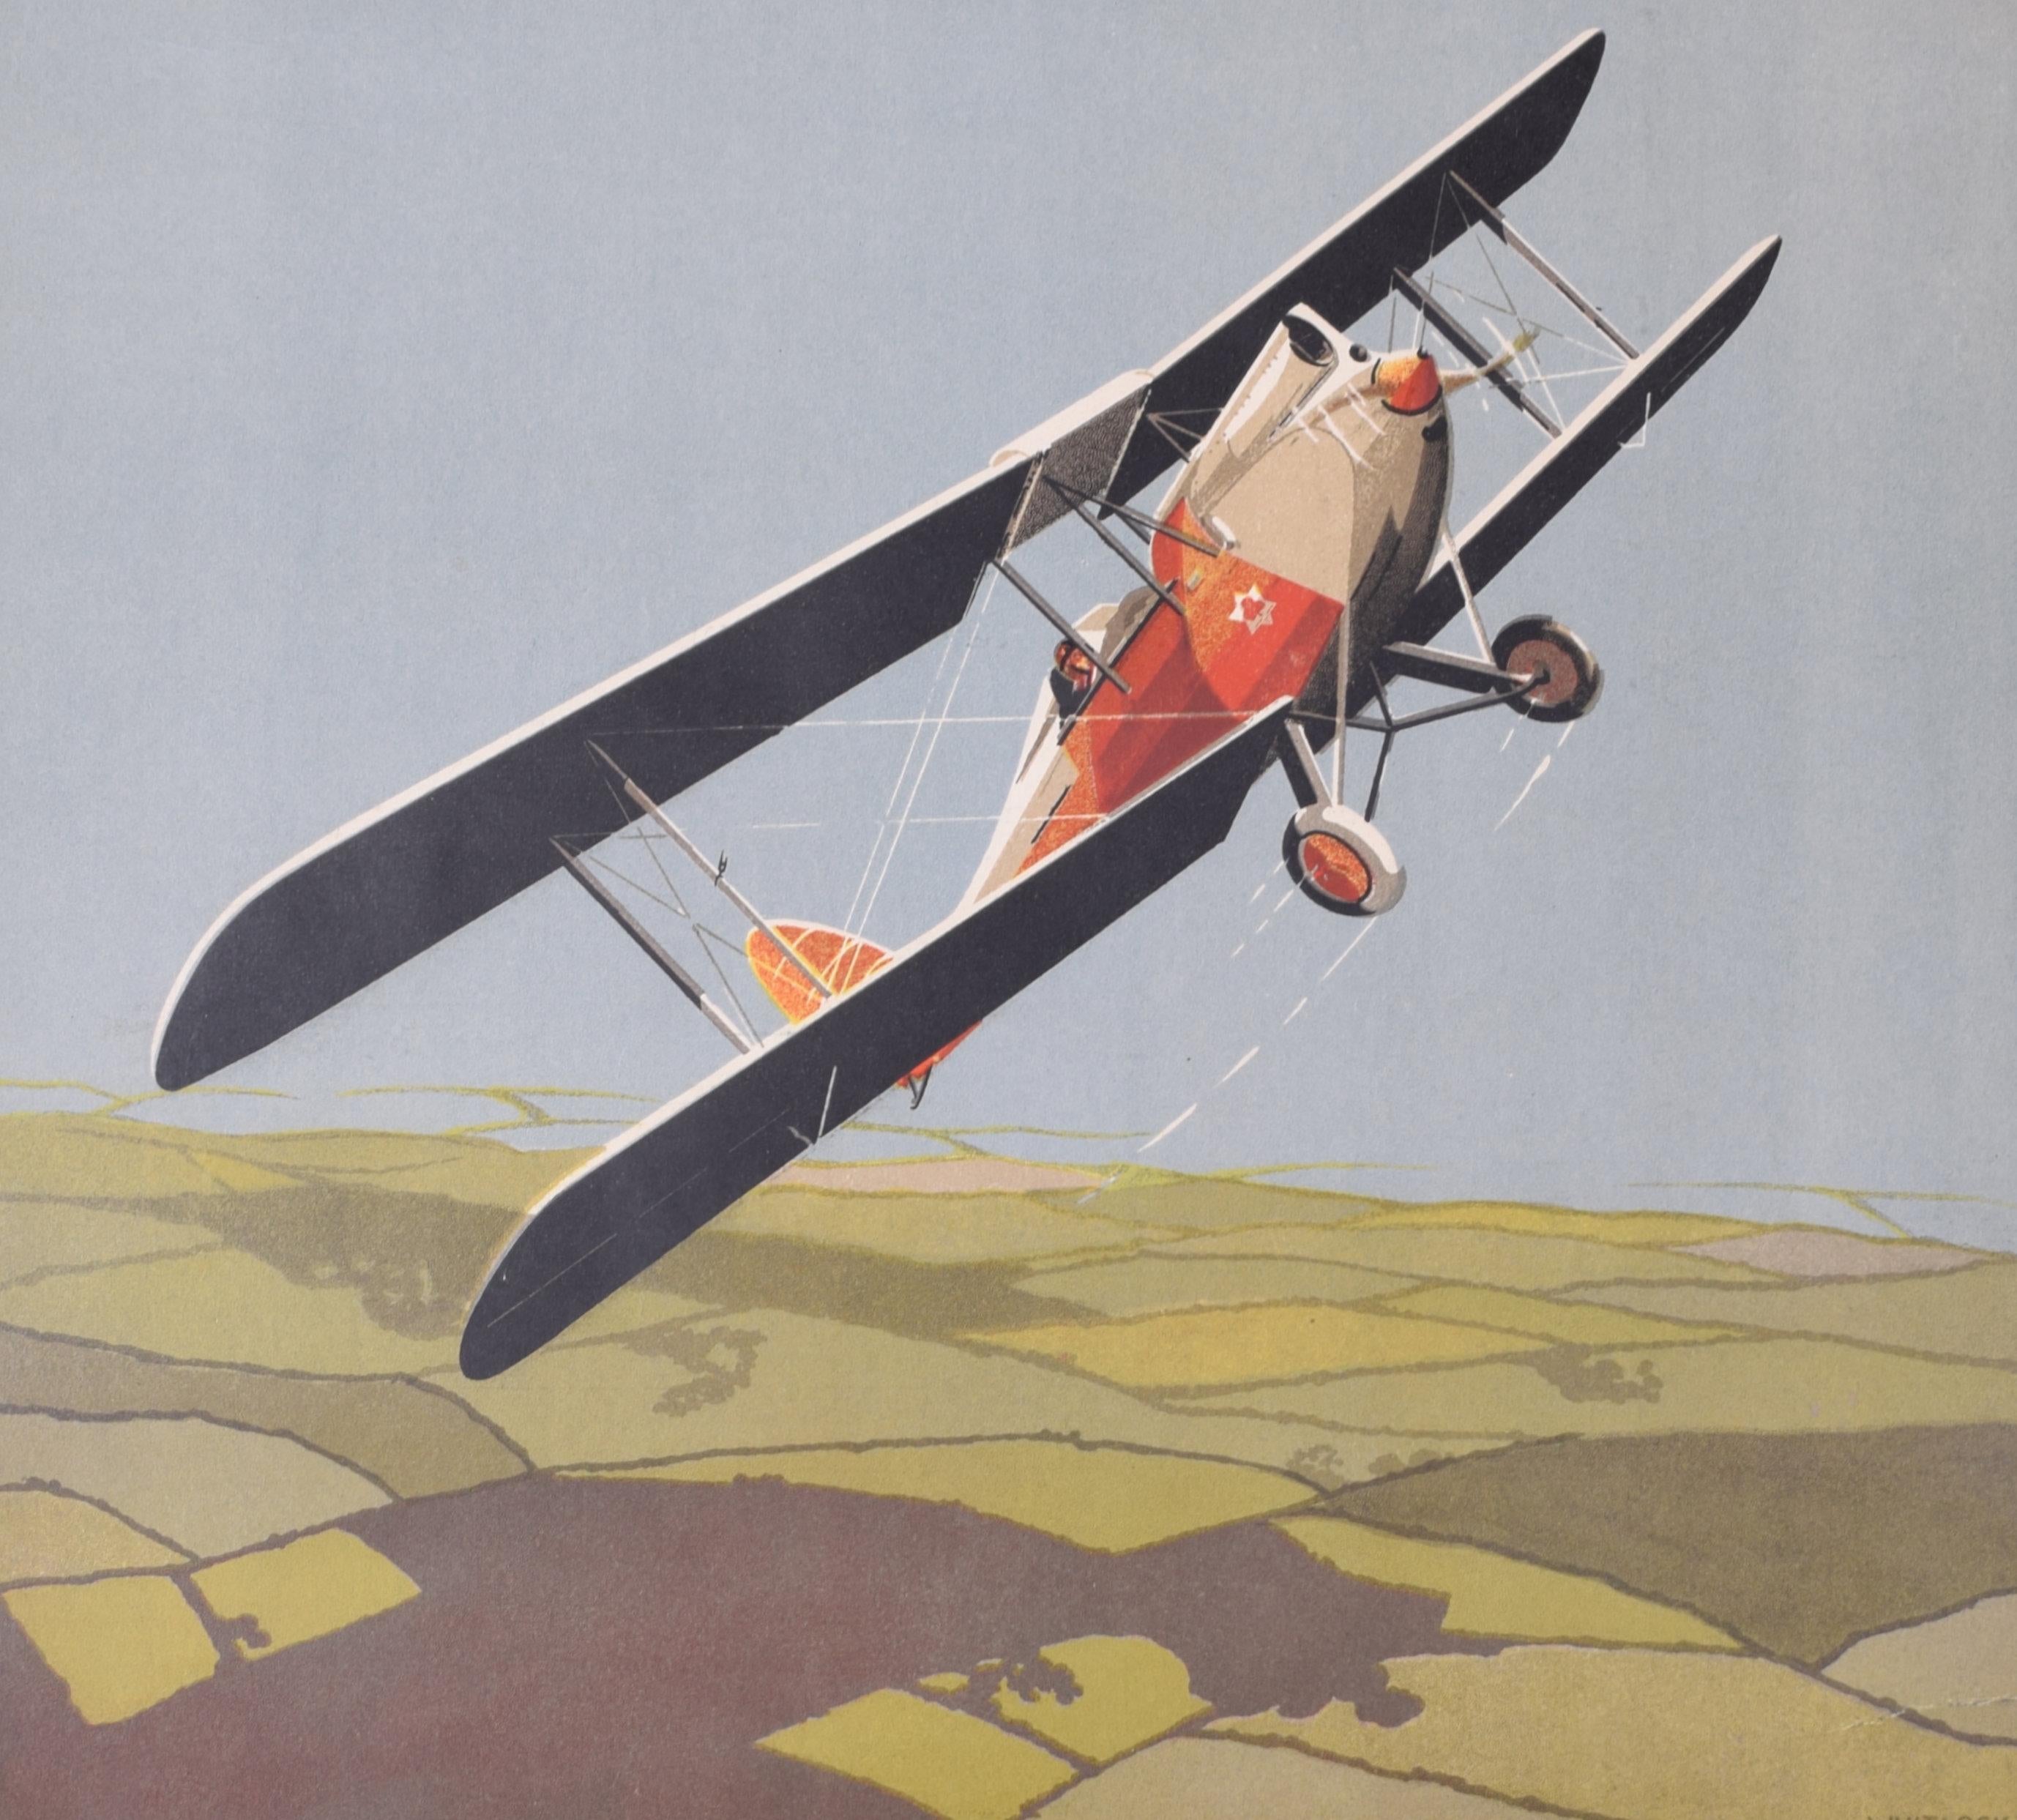 National Savings biplane original vintage 1930s poster - Print by Unknown